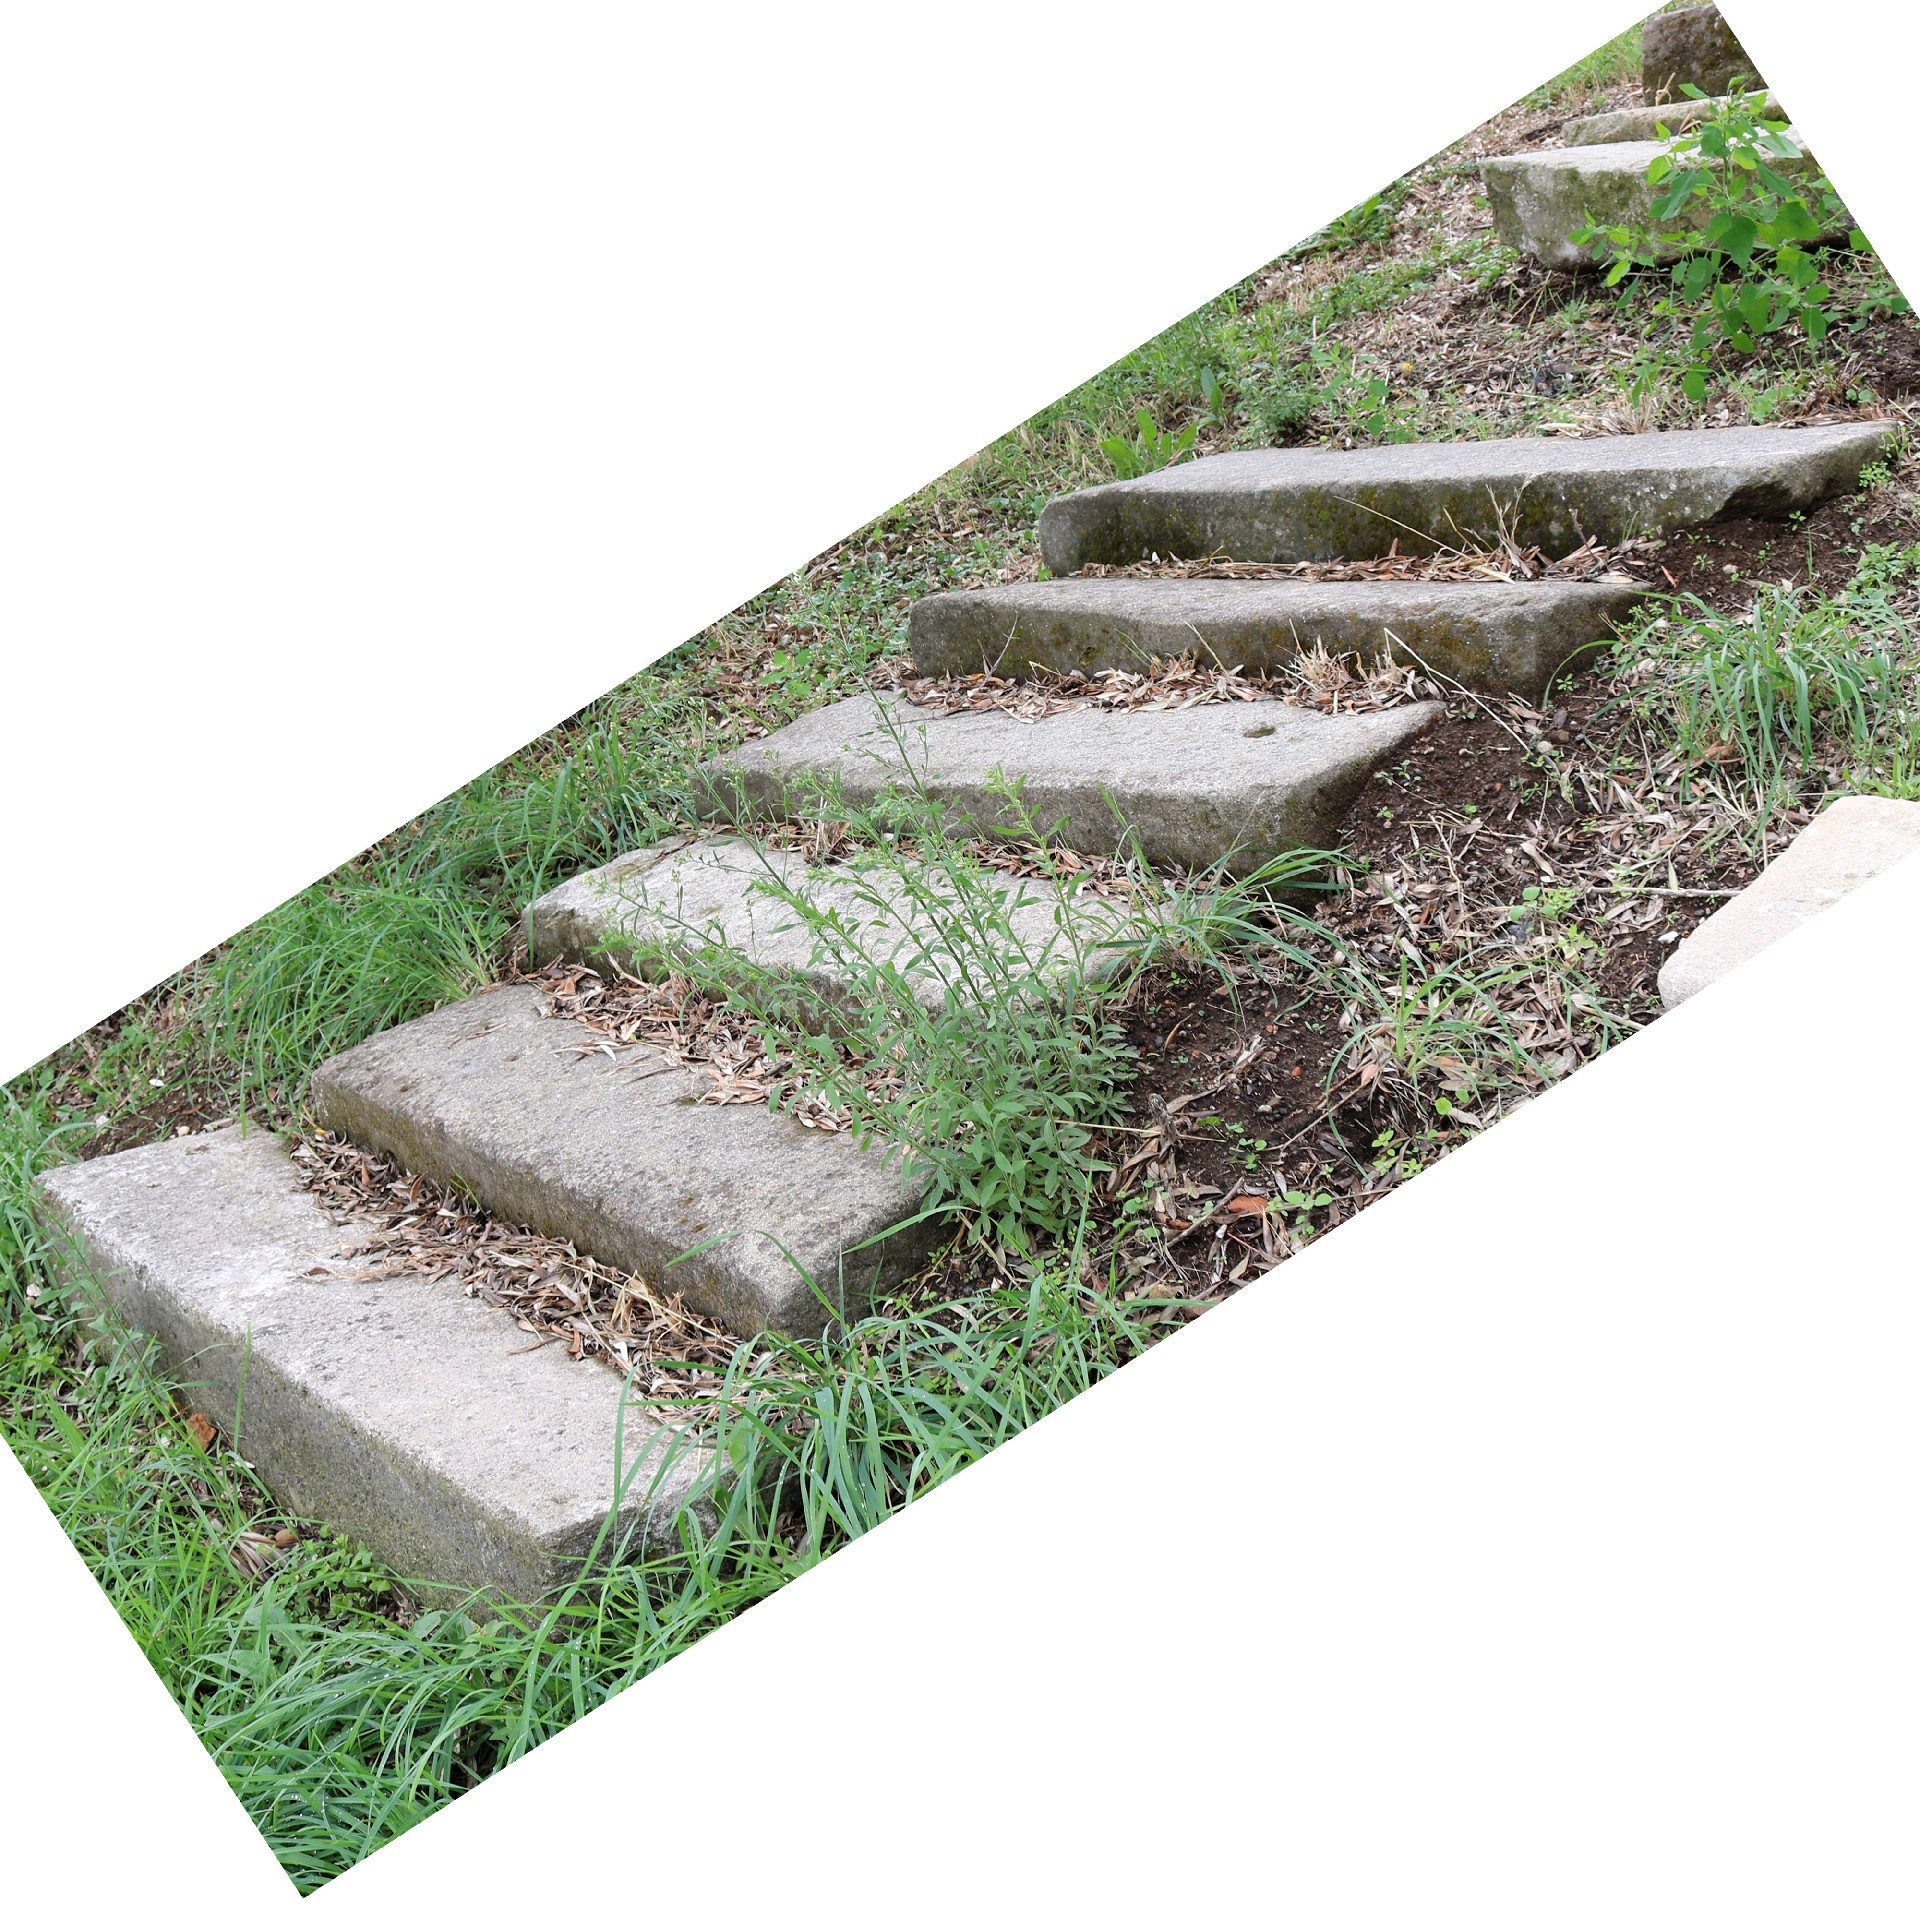 Antica scalinata in pietra - 1